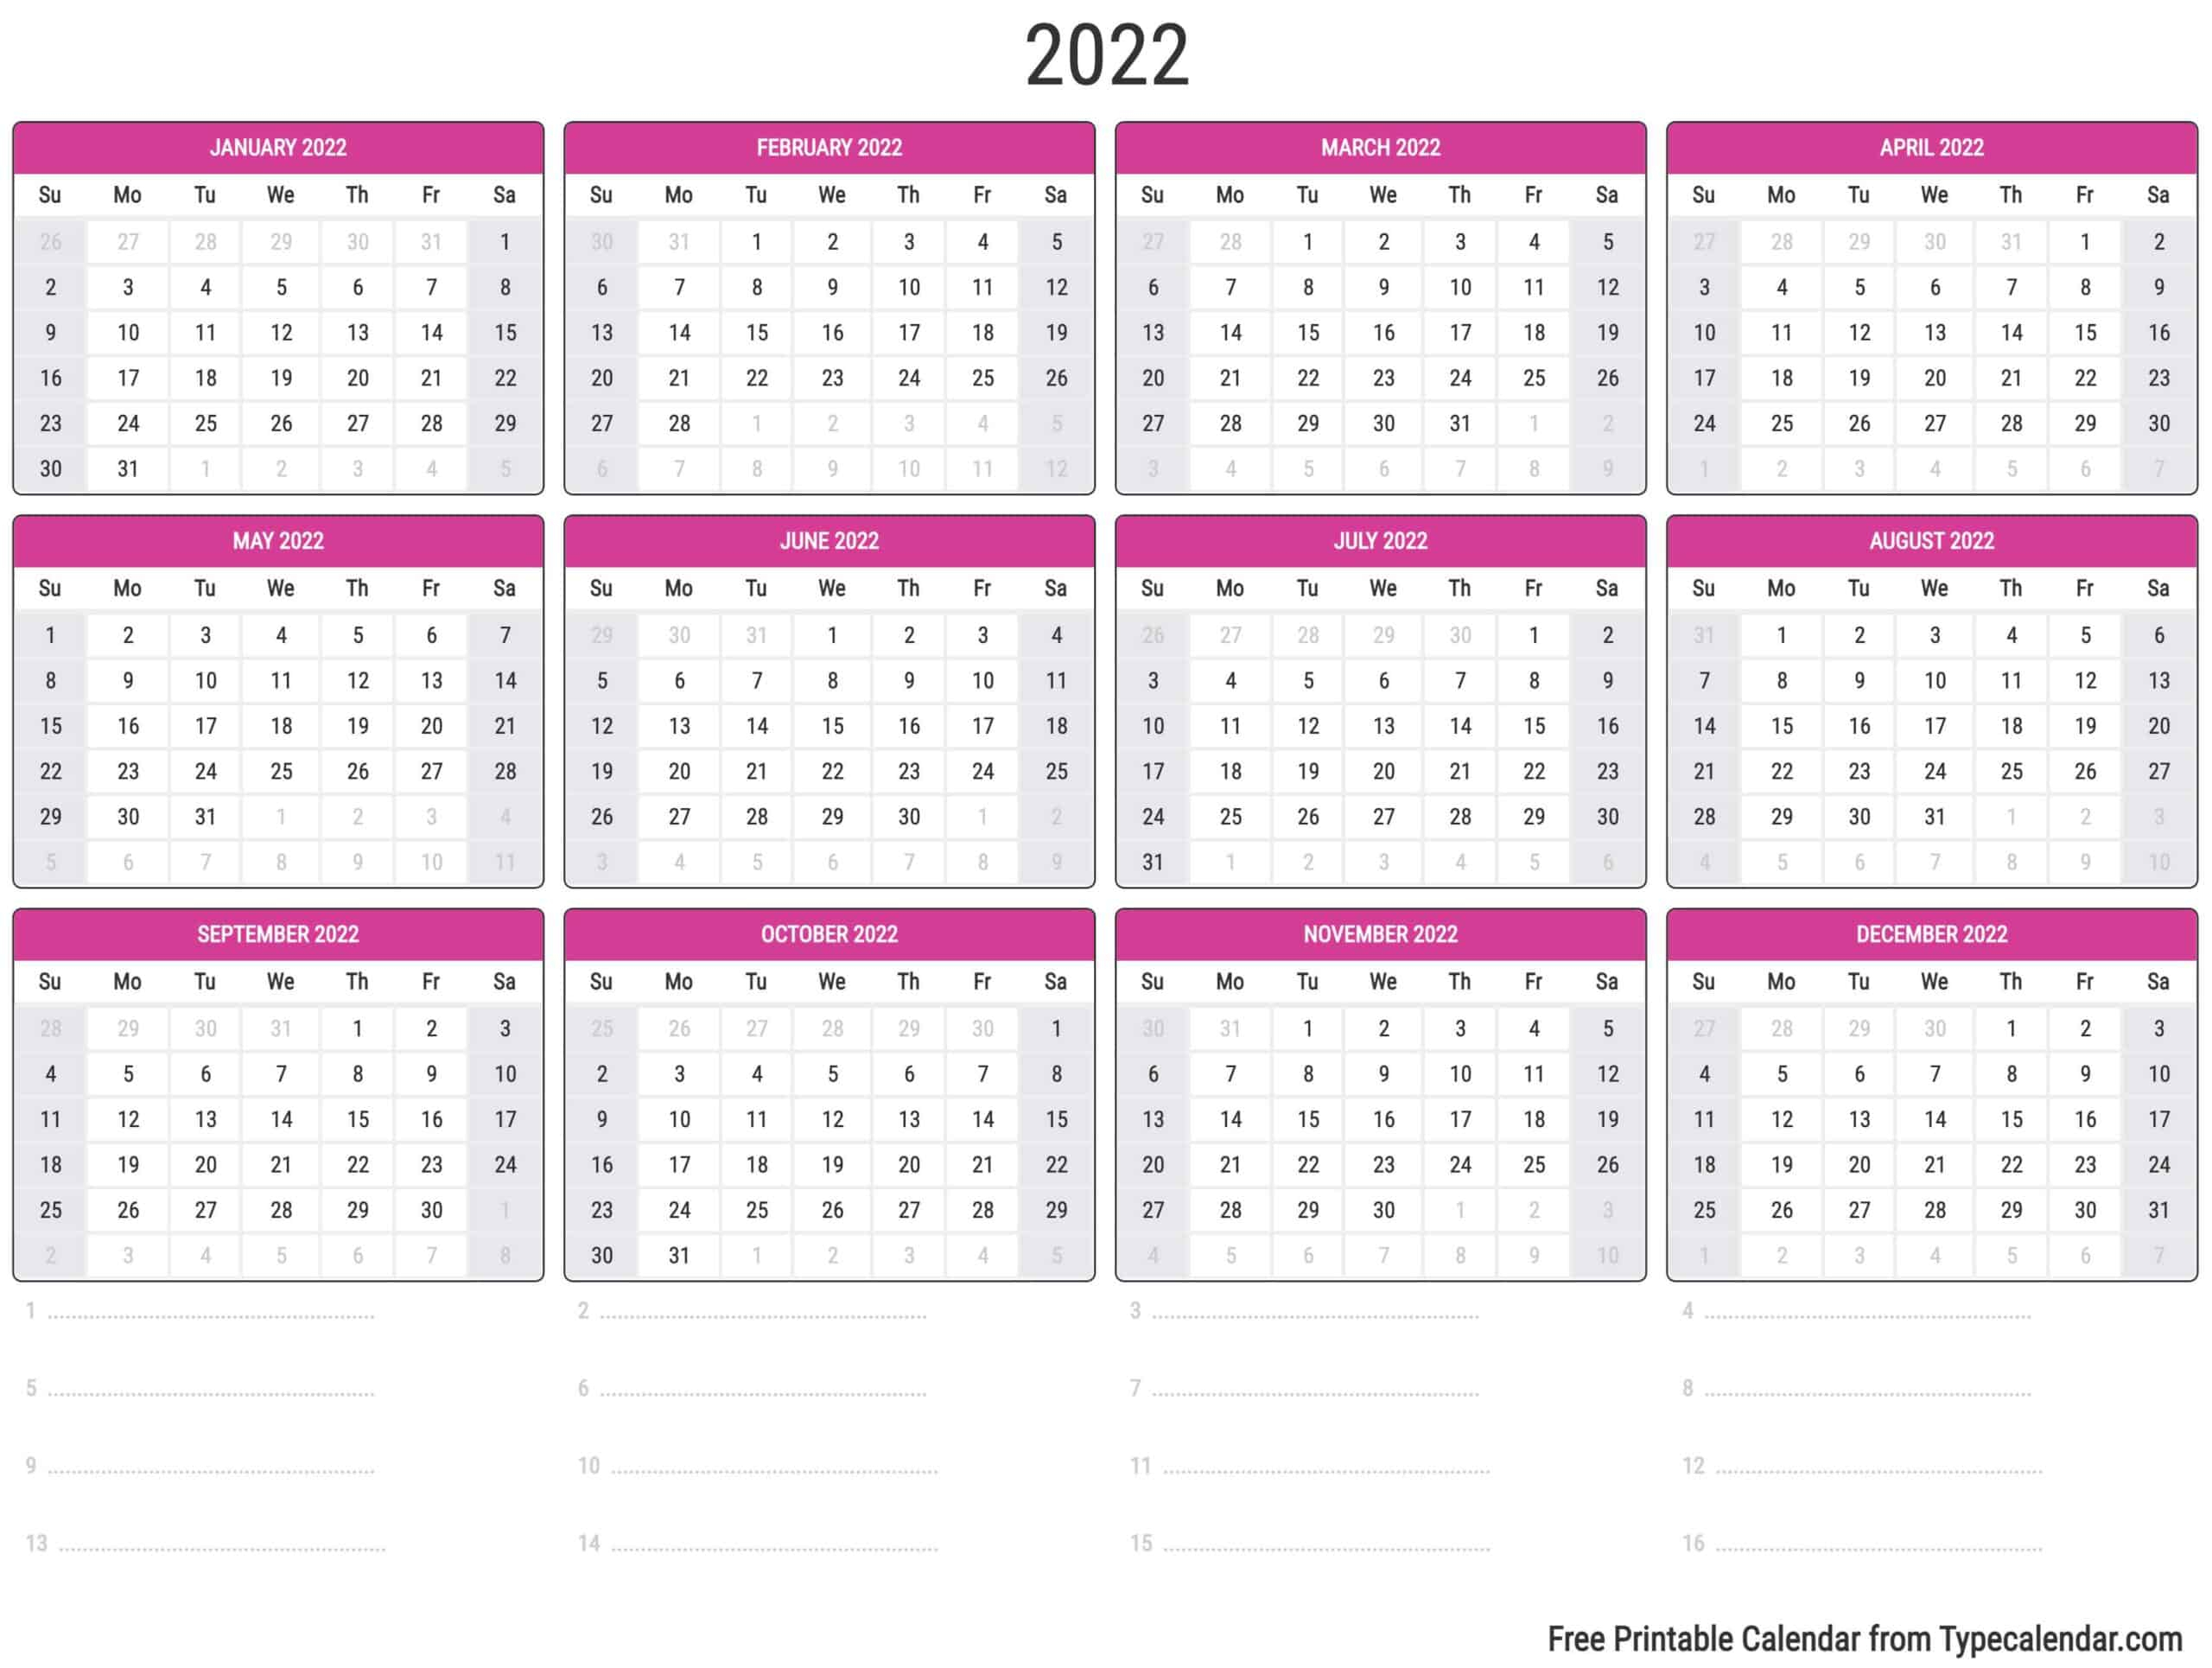 Free Printable Year 2022 Calendar | Type Calendar